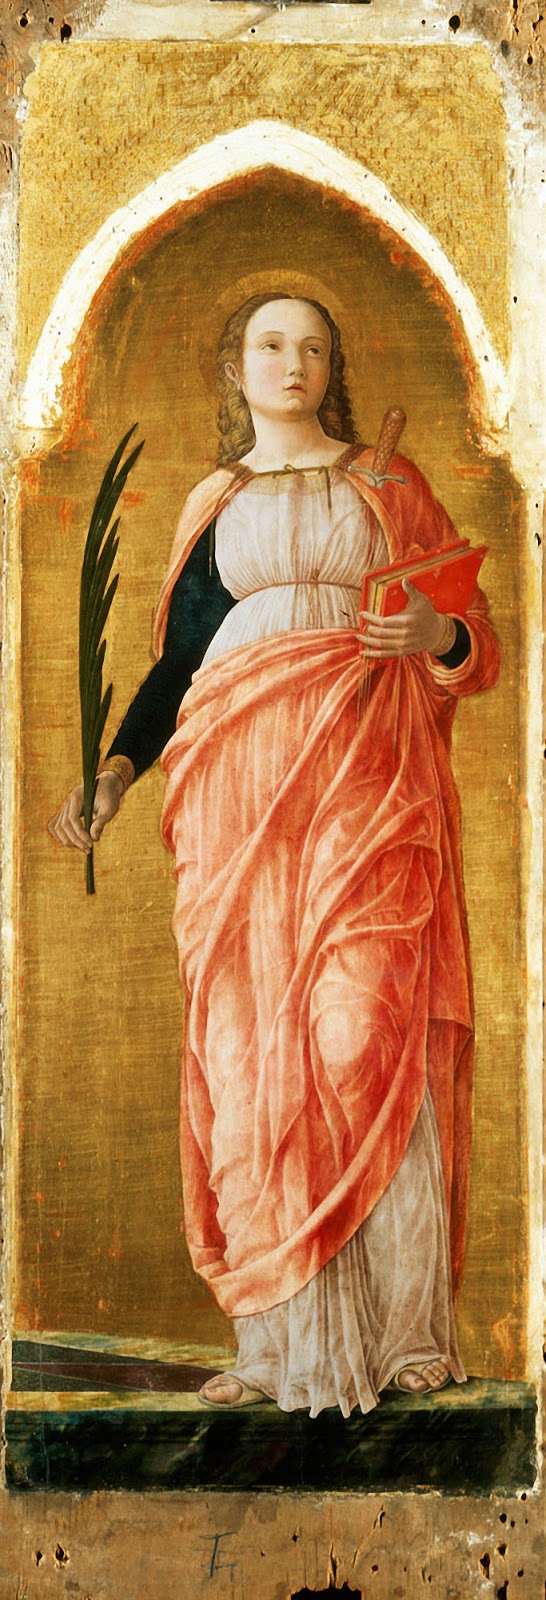 Andrea+Mantegna-1431-1506 (85).jpg